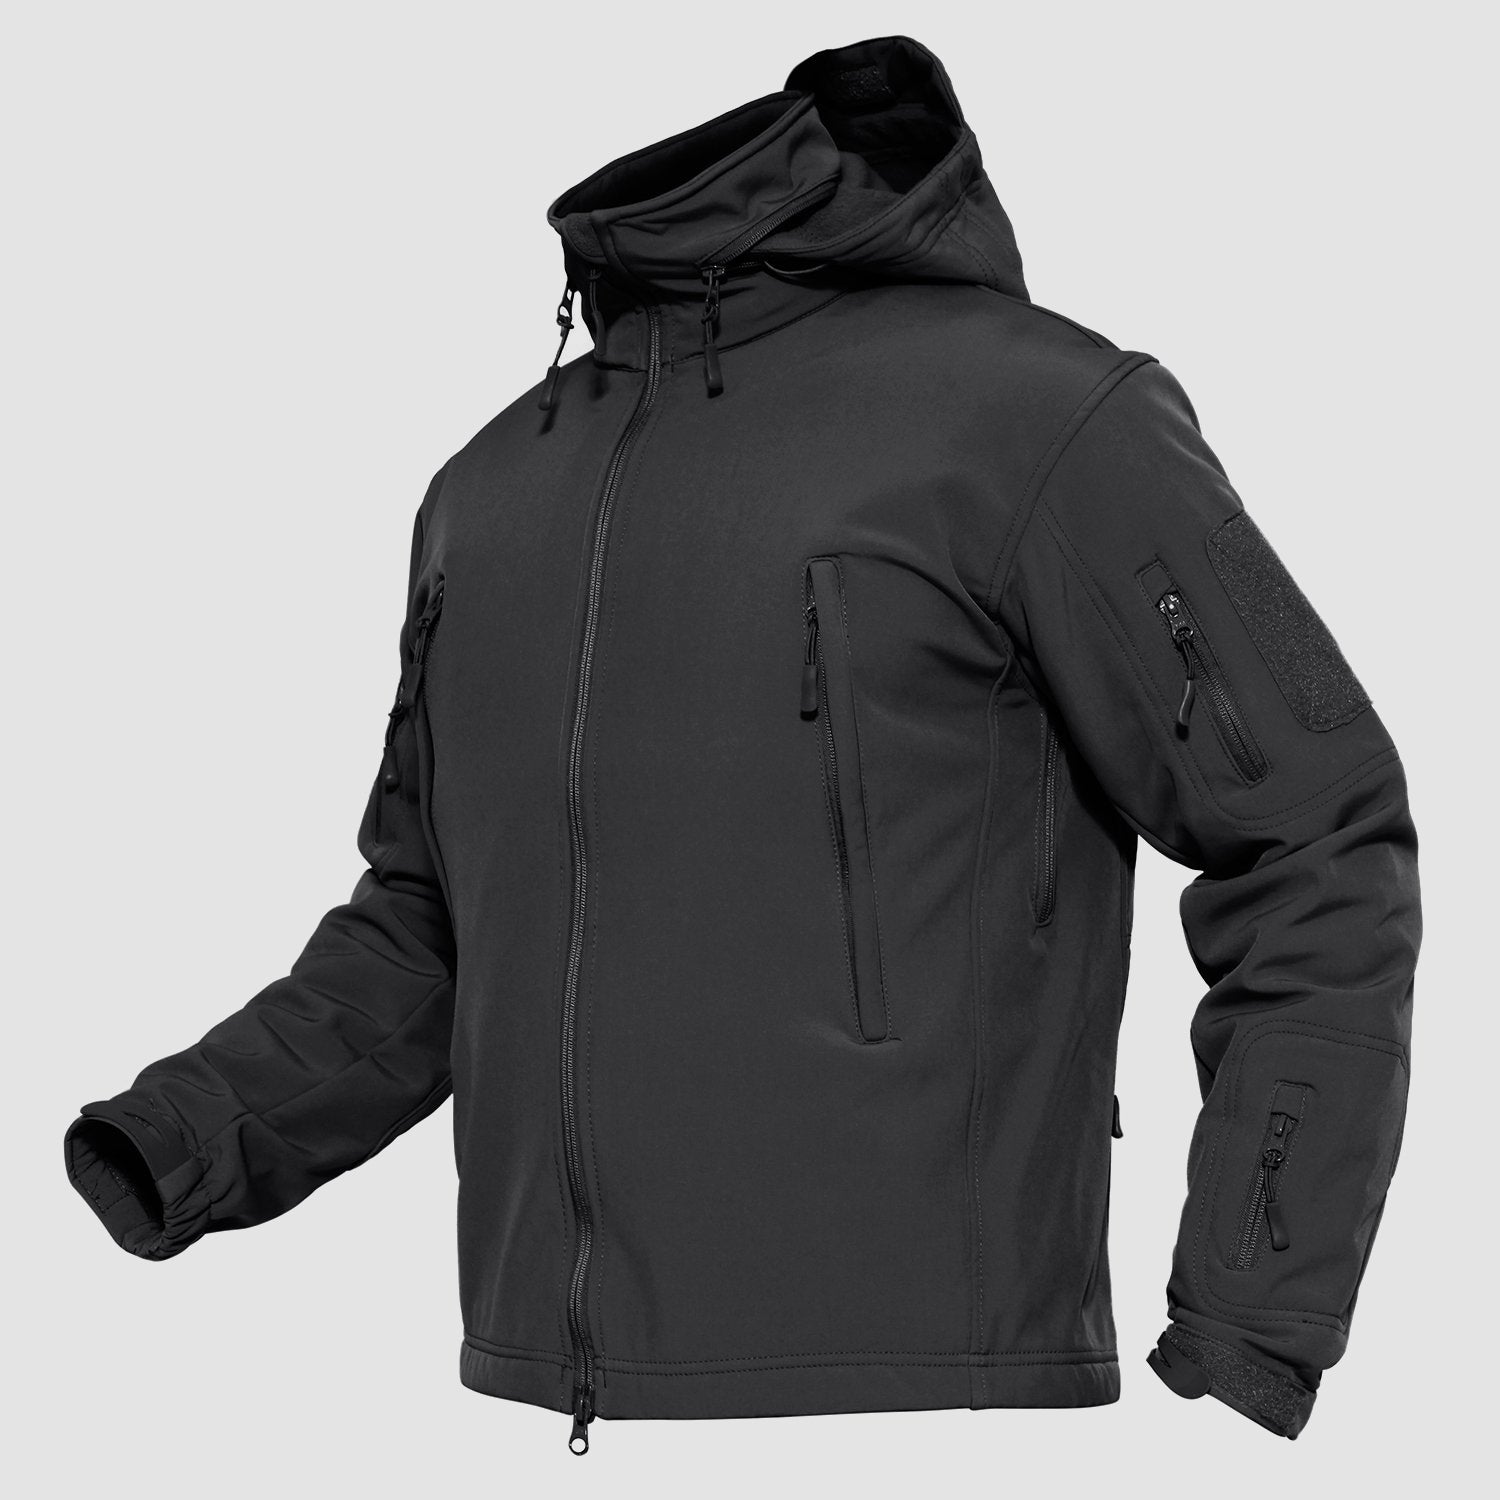 Buy MAGCOMSEN Men's Hoodie Fleece Jacket 6 Zip-Pockets Warm Winter Jacket  Military Tactical Jacket, Army Green, Large at